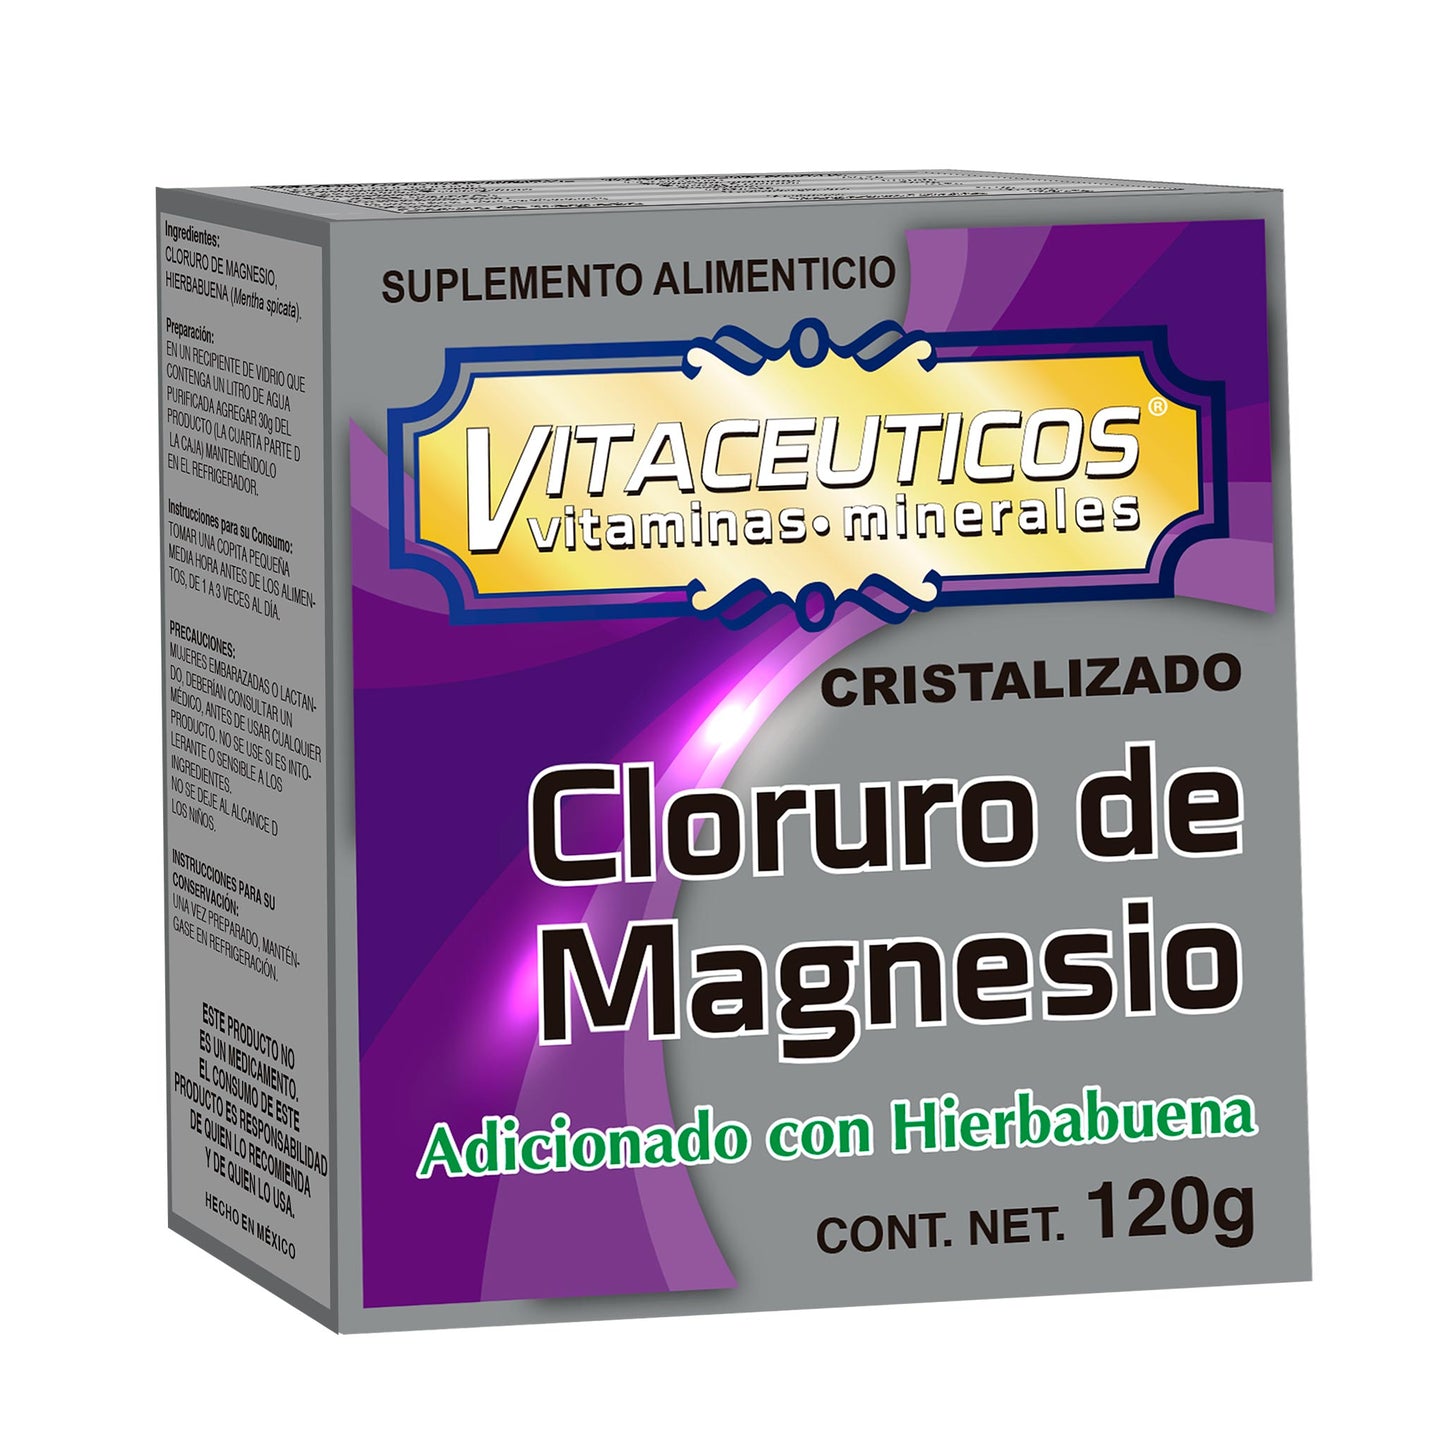 VITACEUTICOS ® polvo de cloruro de magnesio 120g